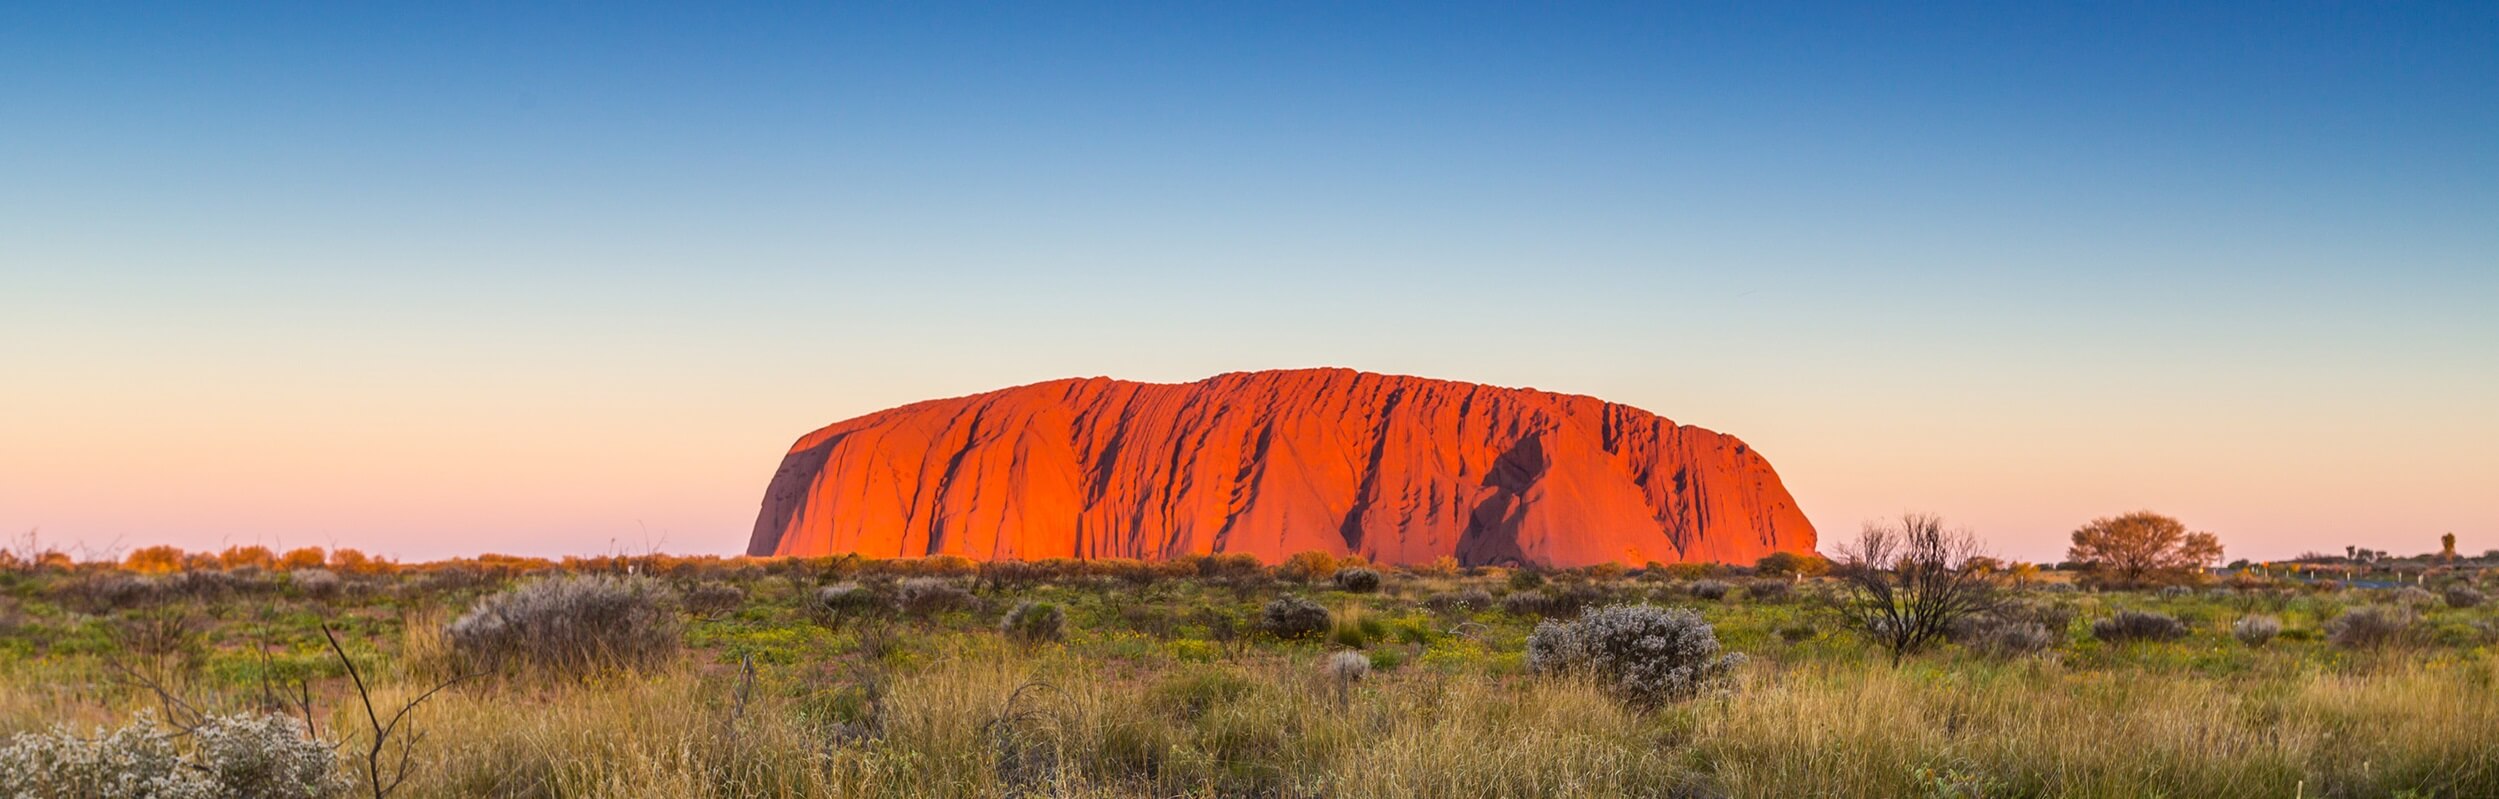 Why is Uluru on the World Heritage list?